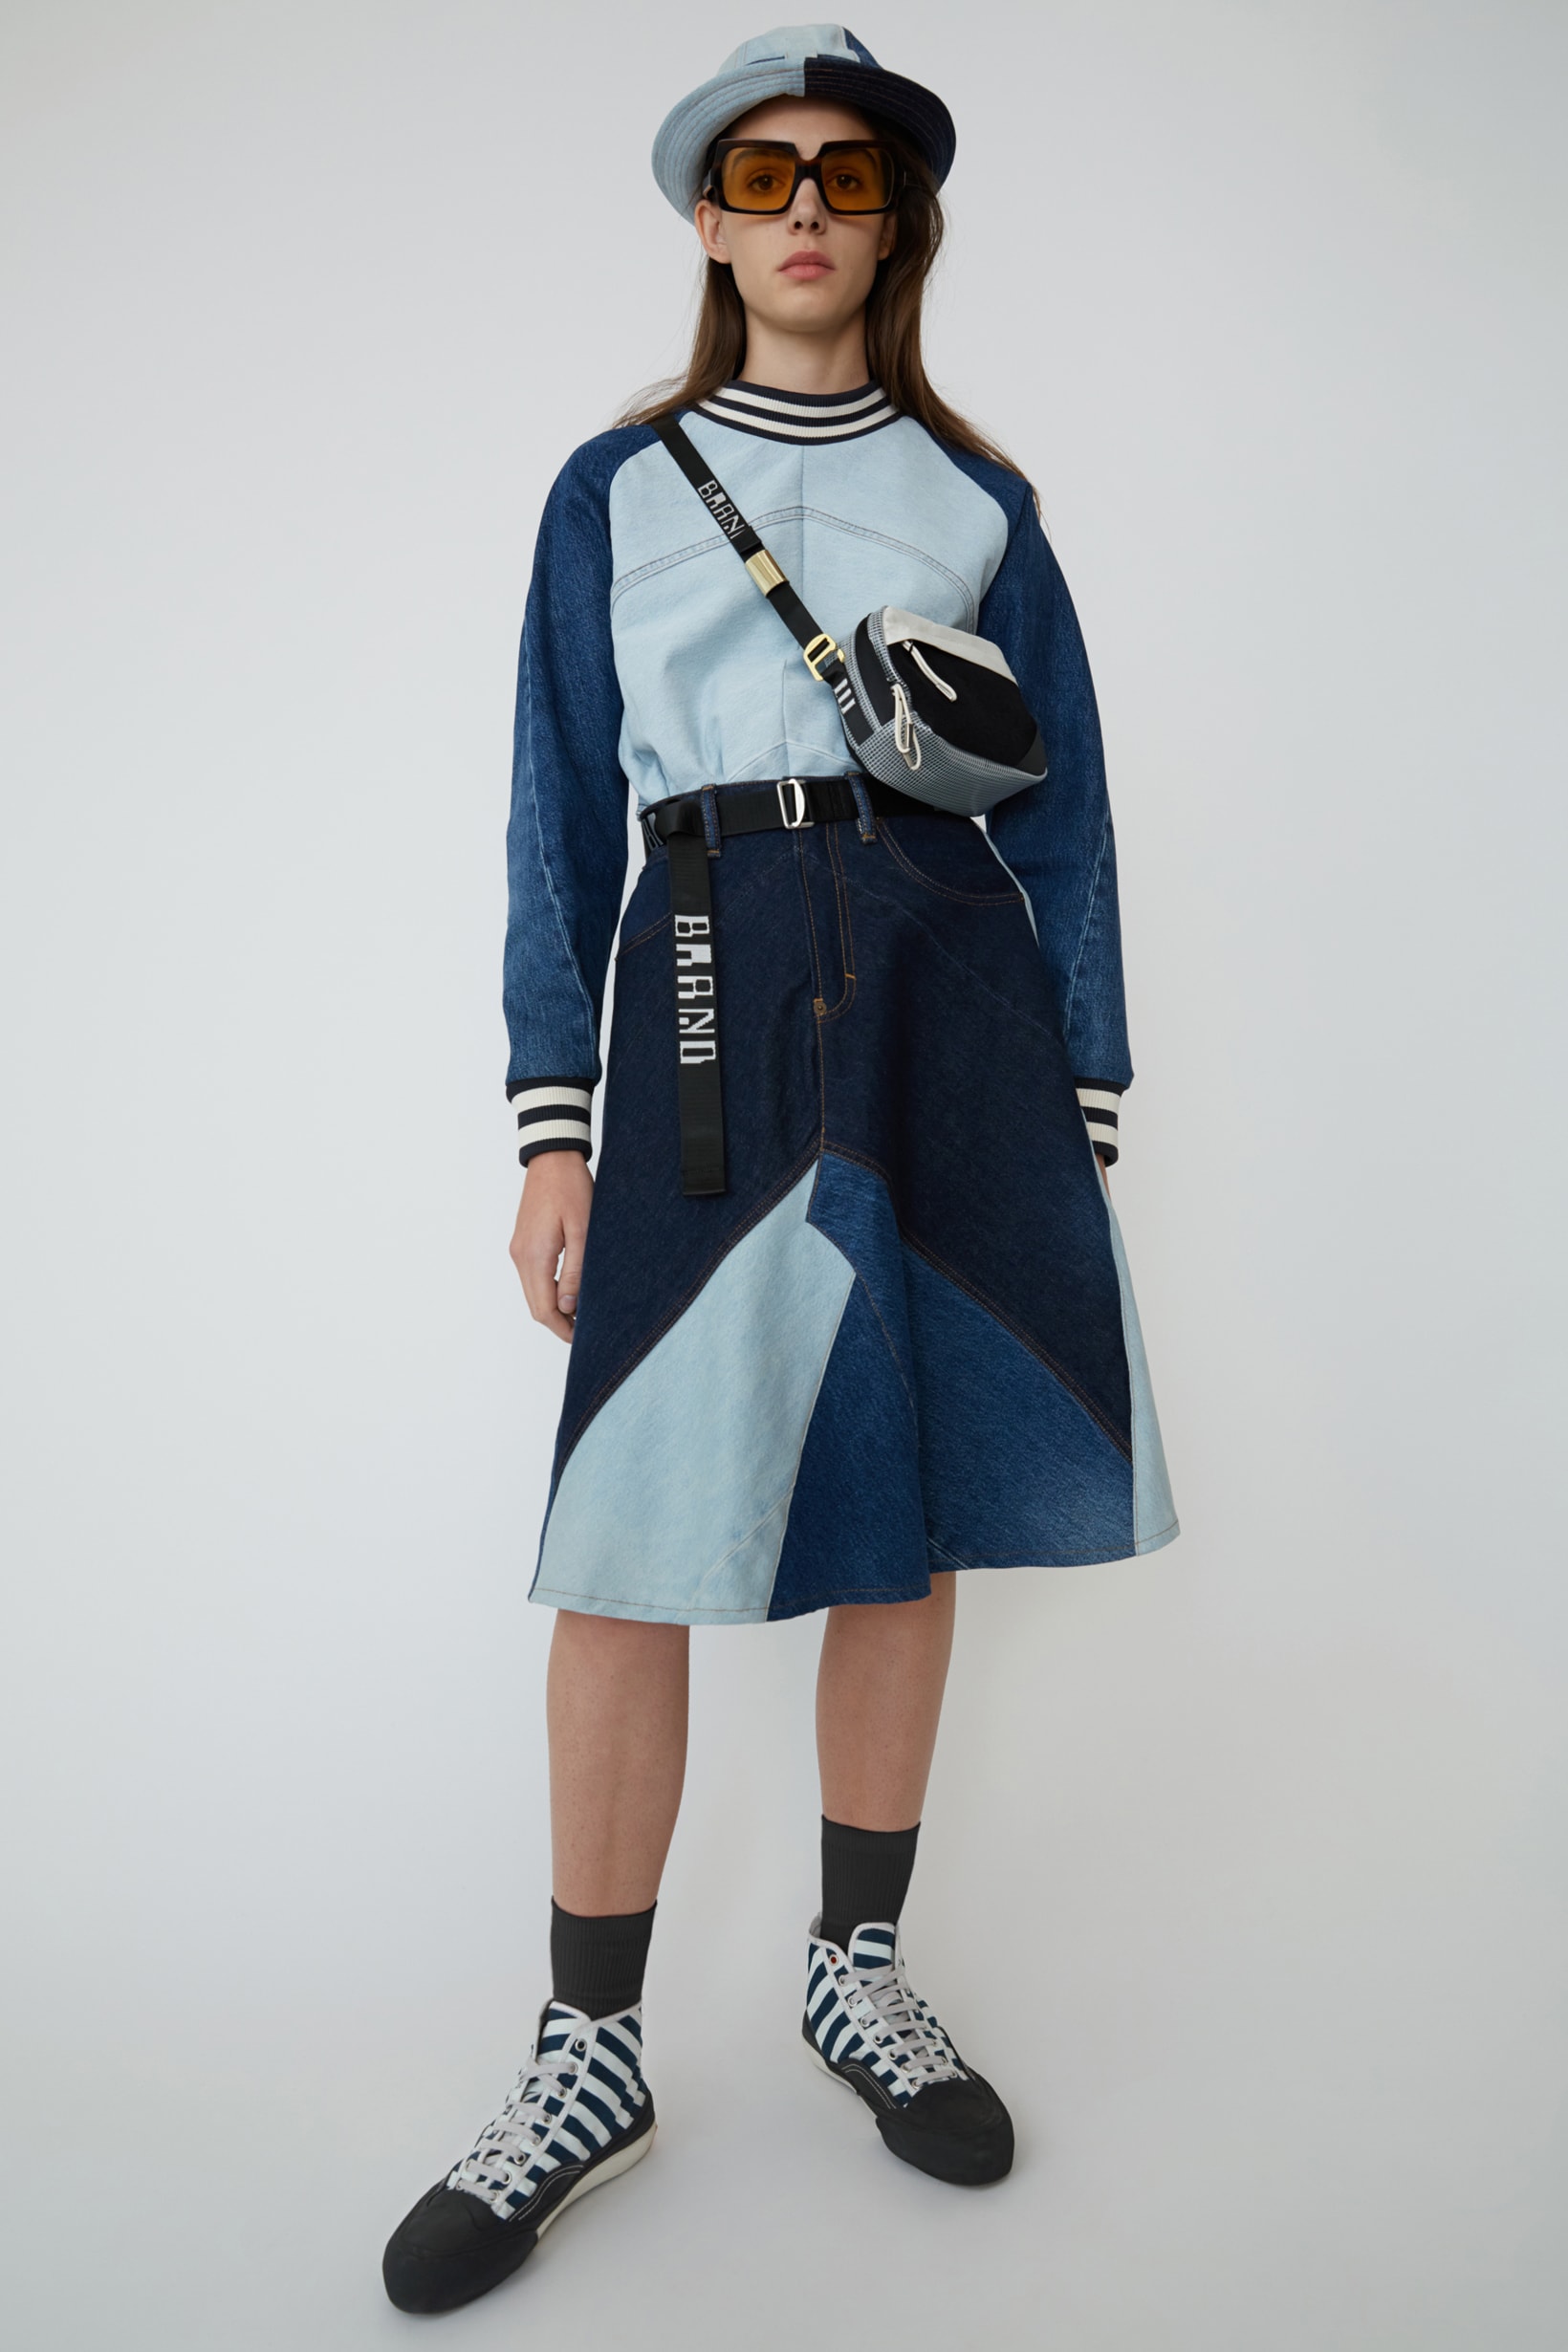 Acne Studios Spring Summer 2019 Denim Collection Shirt Skirt Bag Blue